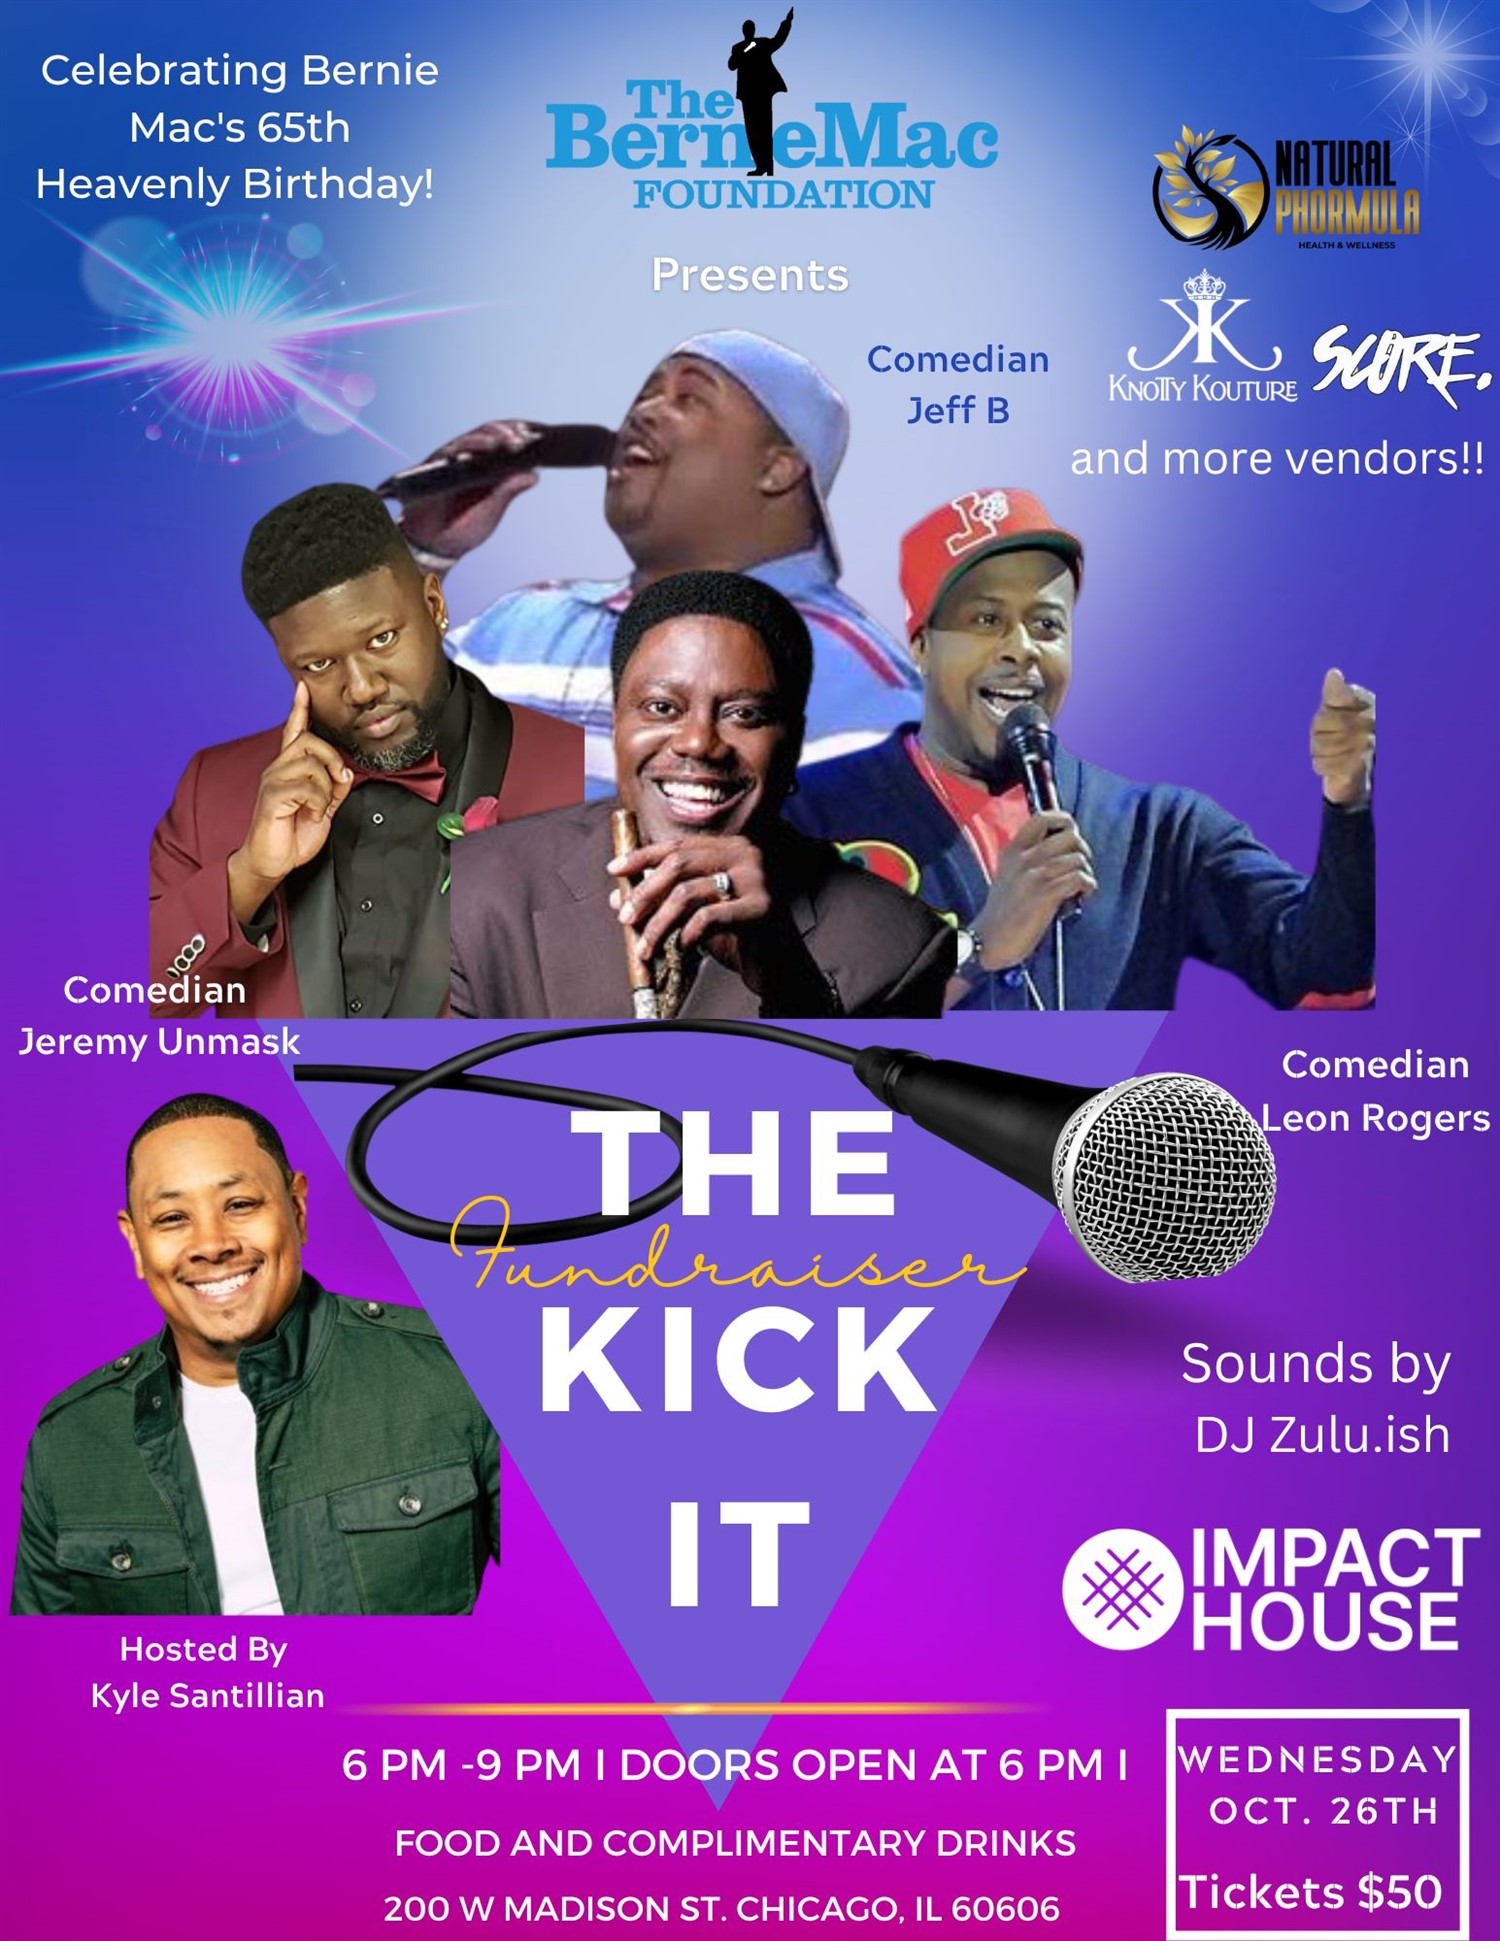 The Kick It Fundraiser  on oct. 26, 18:00@Impact House - Compra entradas y obtén información enberniemacfoundation.org 